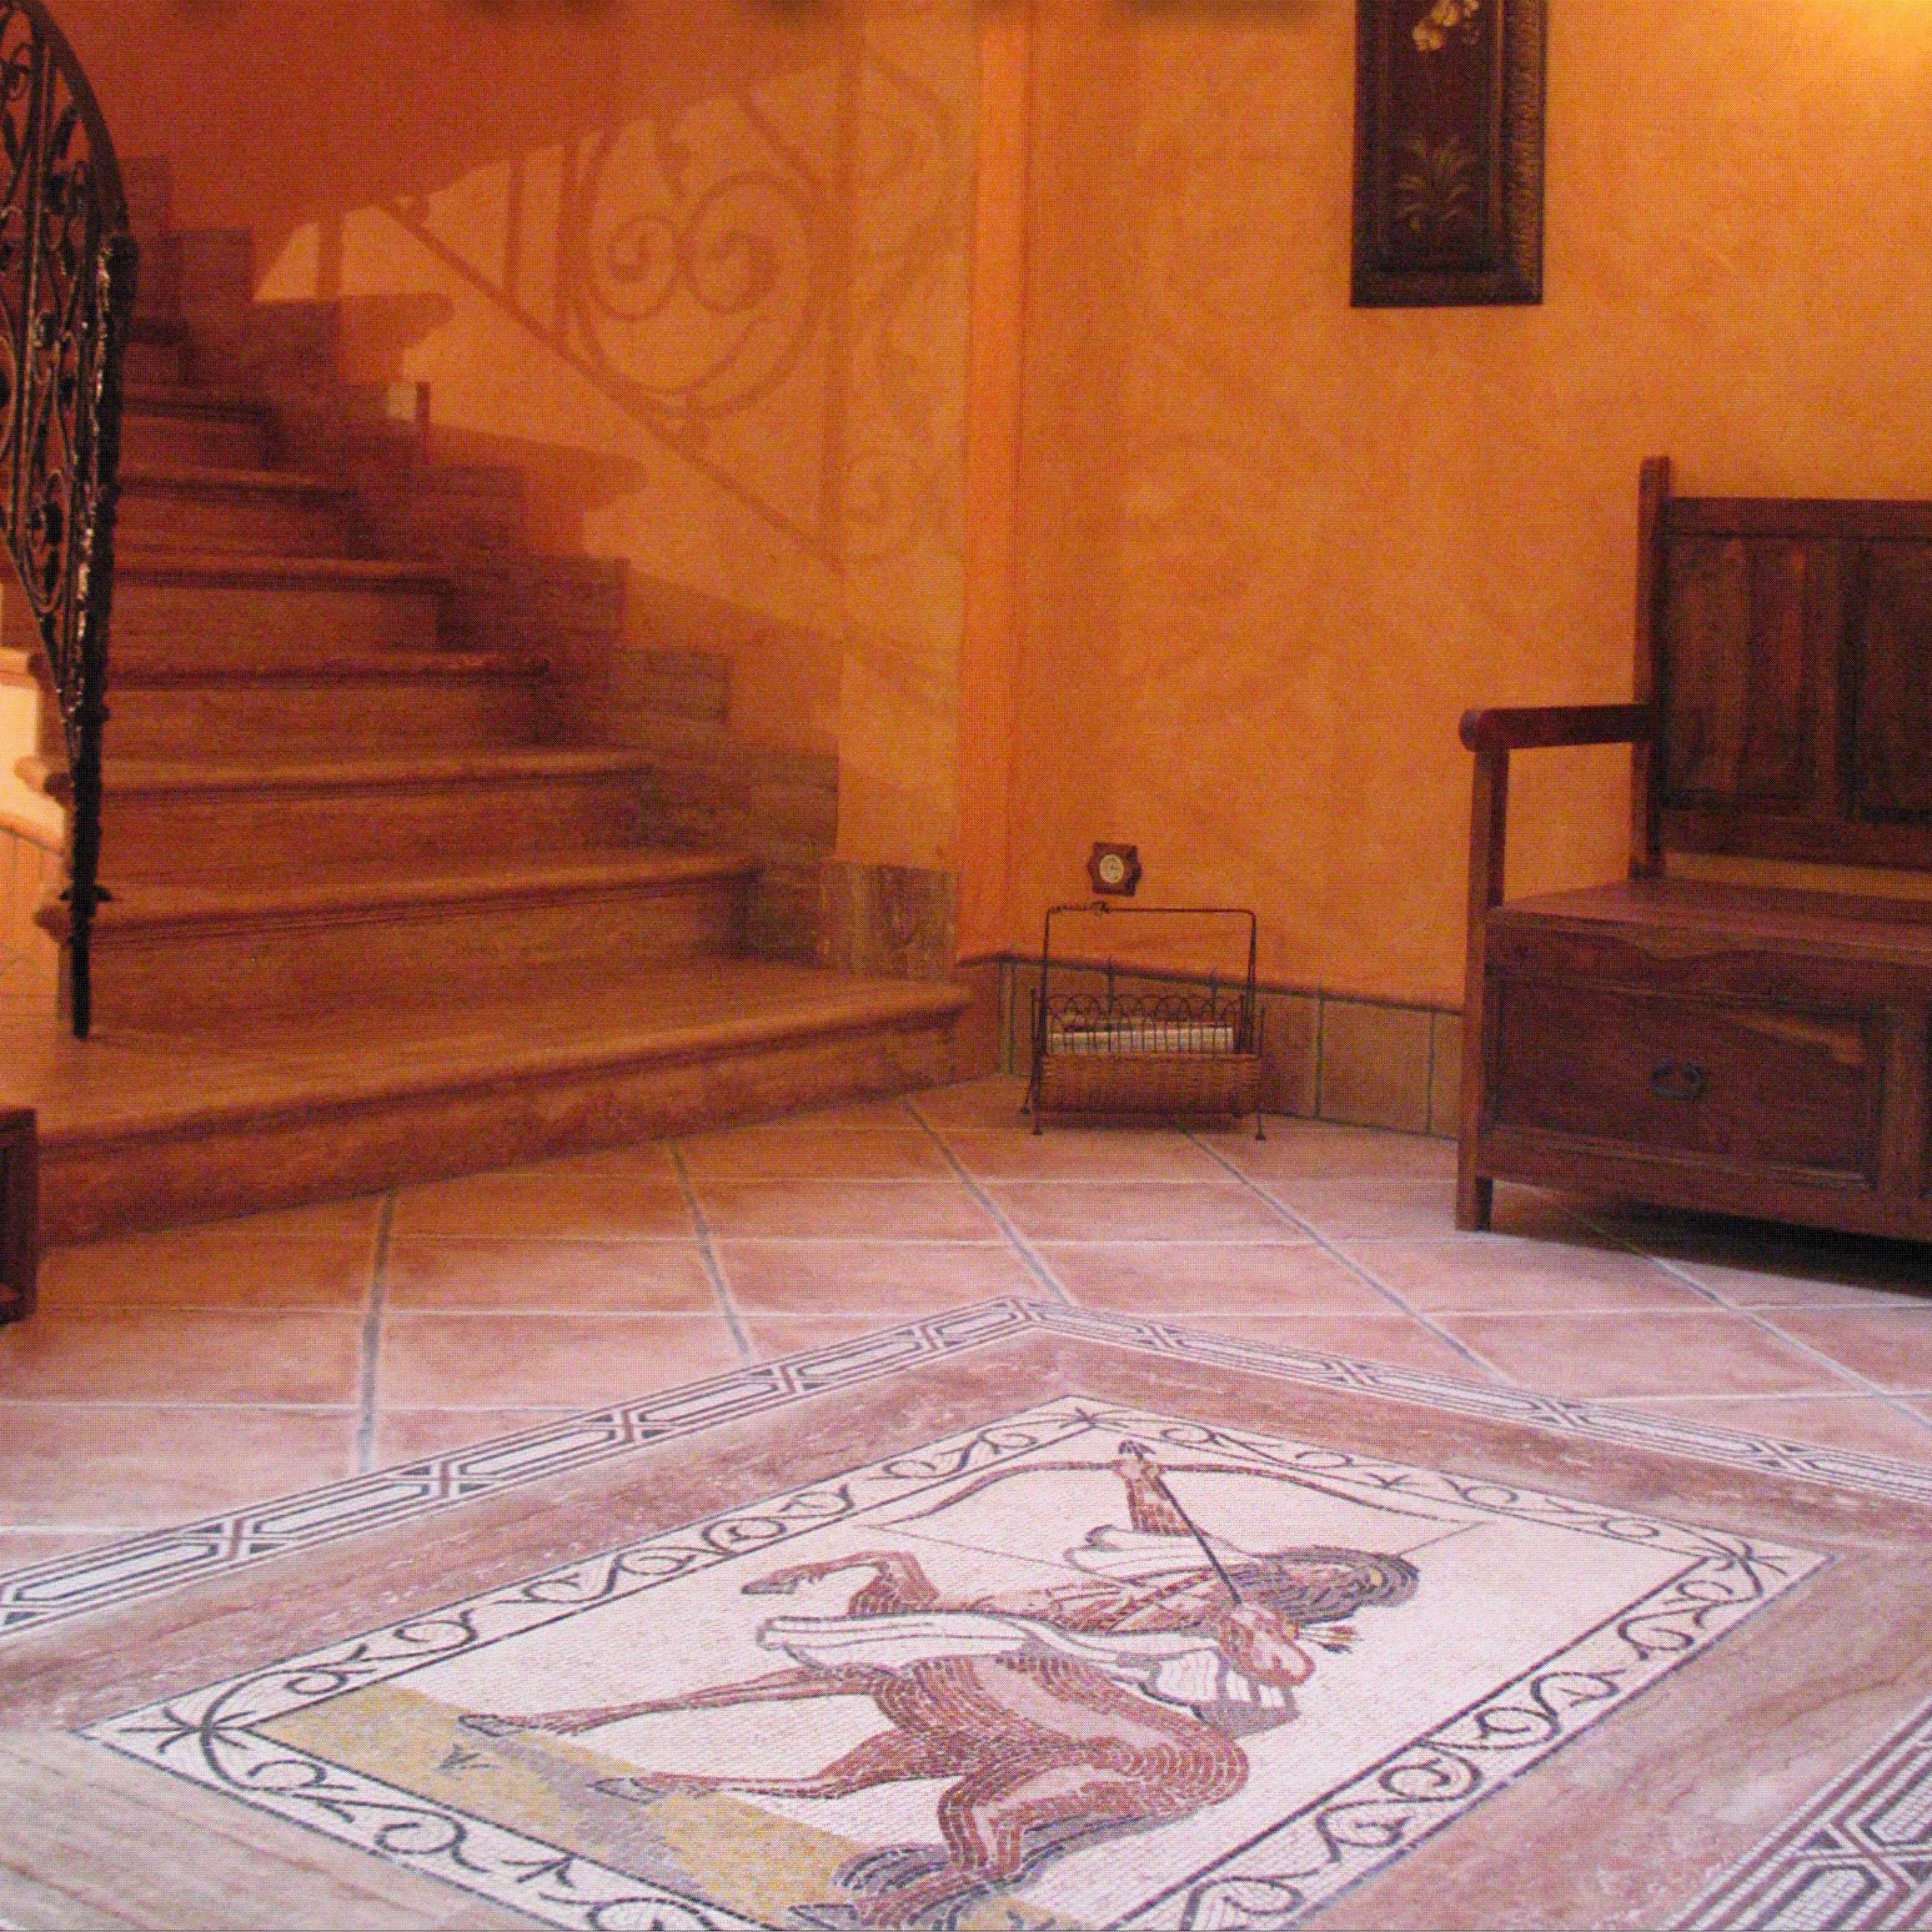 Floor Roman mosaic in a home interior